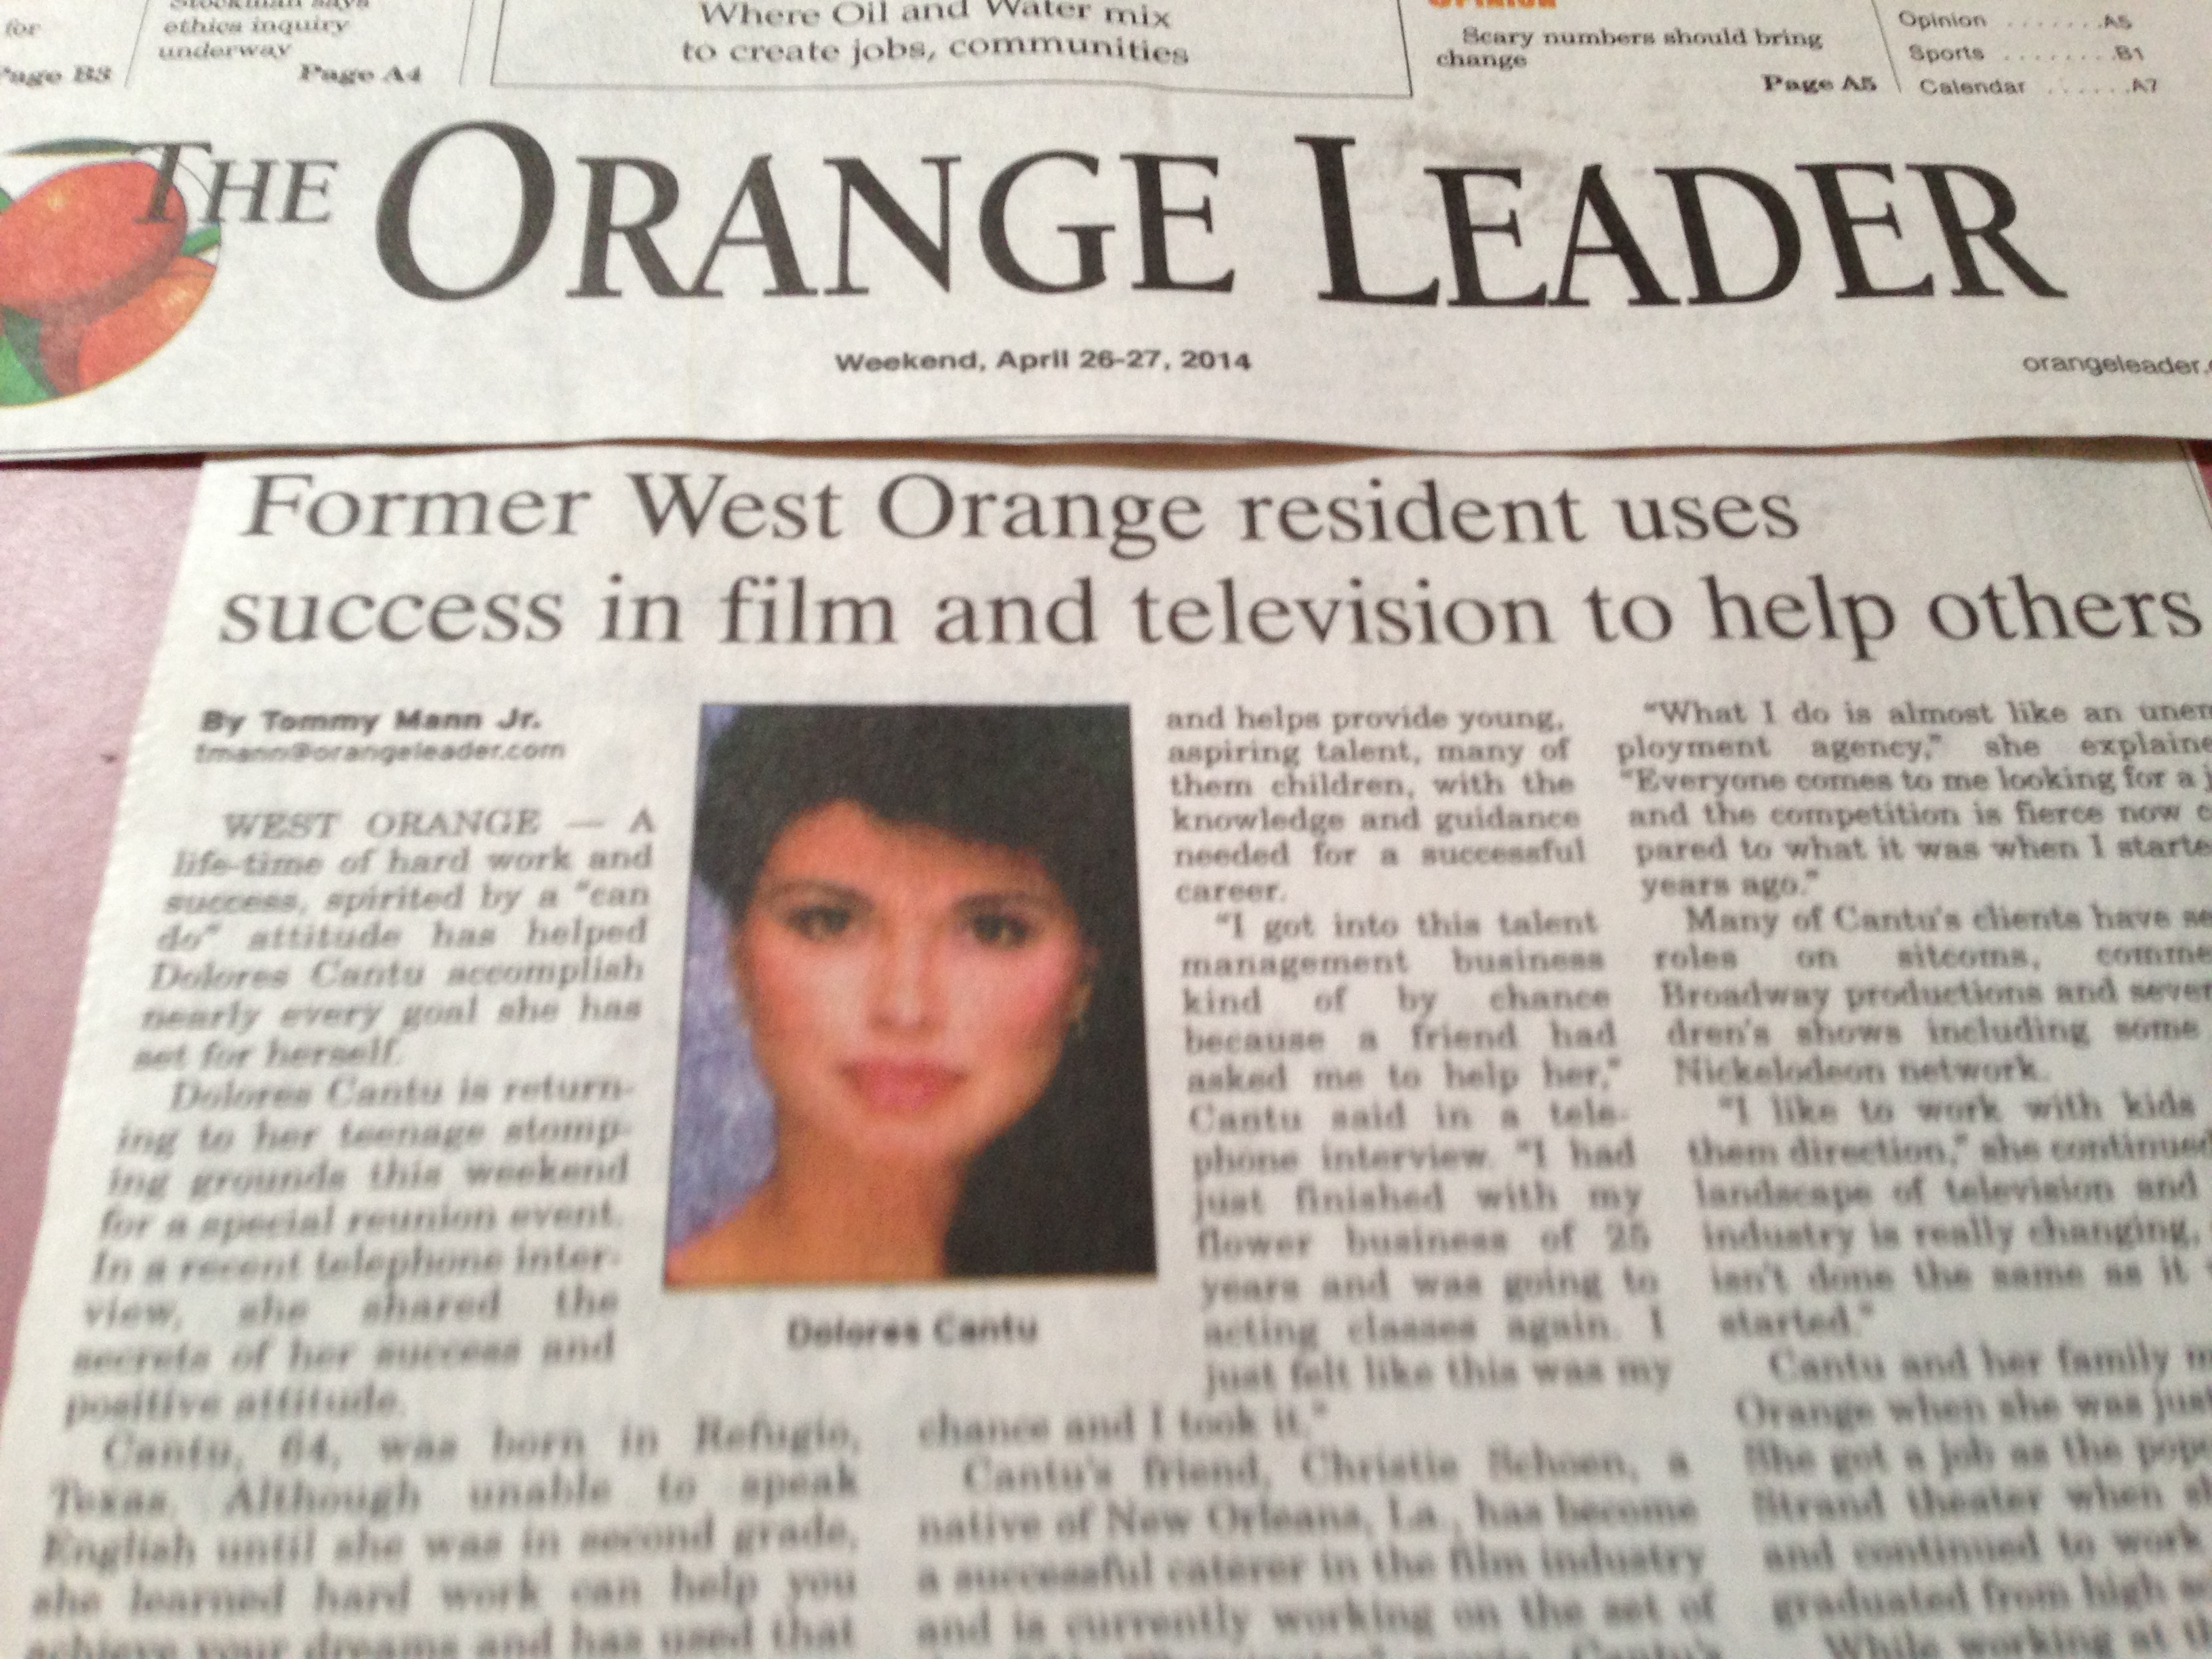 The Orange Leader, West Orange, Texas article